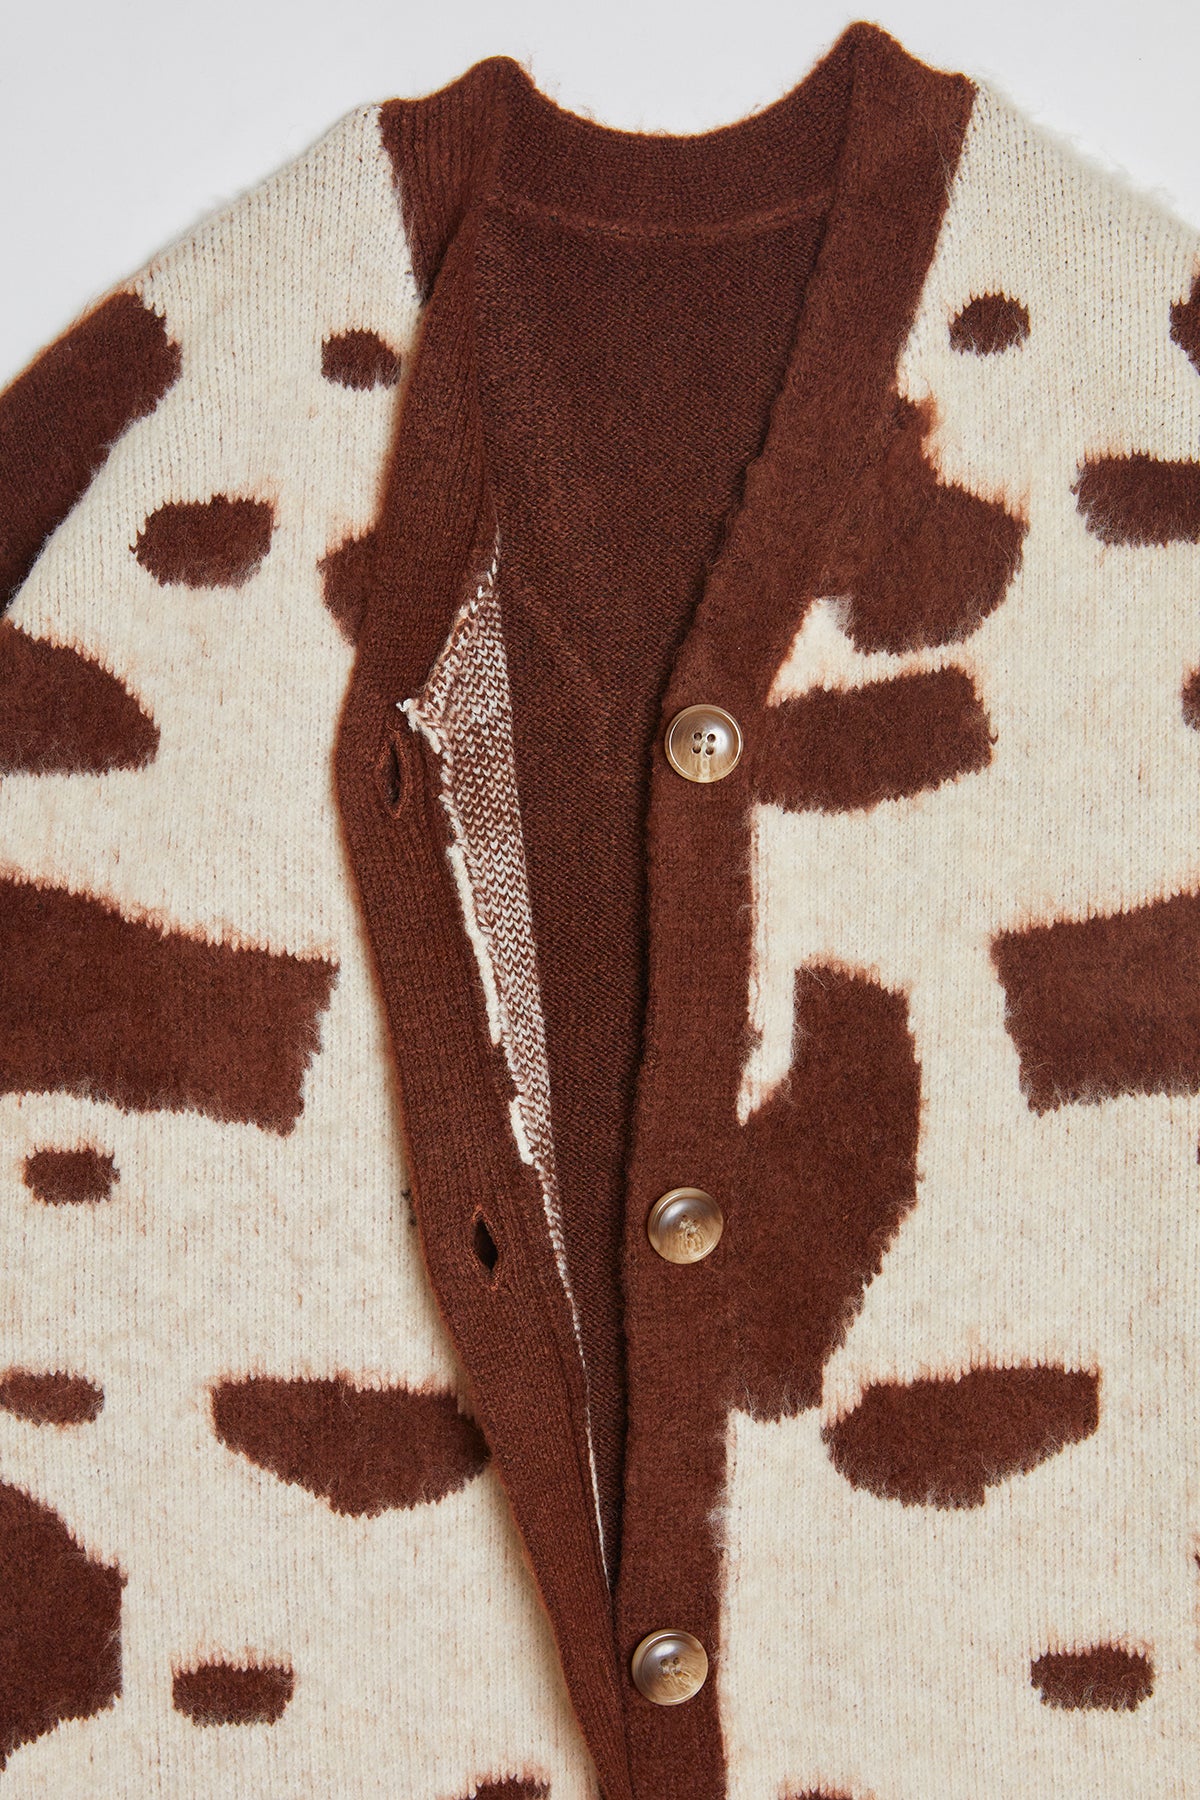 Western Cow Knit Long Cardigan / Brown